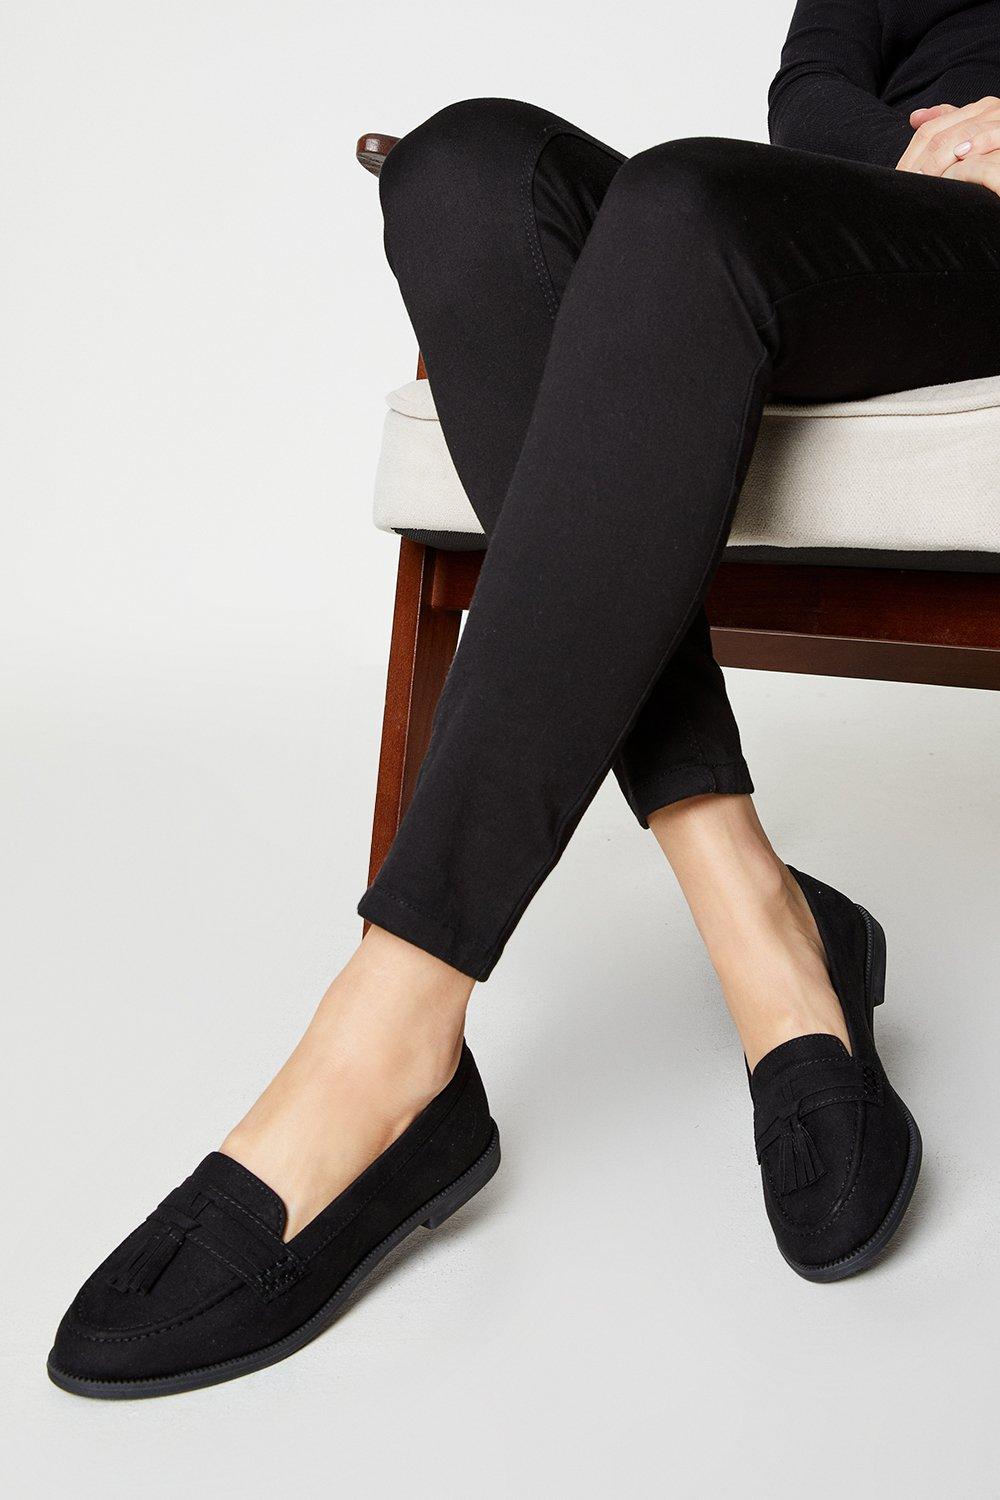 Women's Lennie Tassel Loafers - natural black - 6